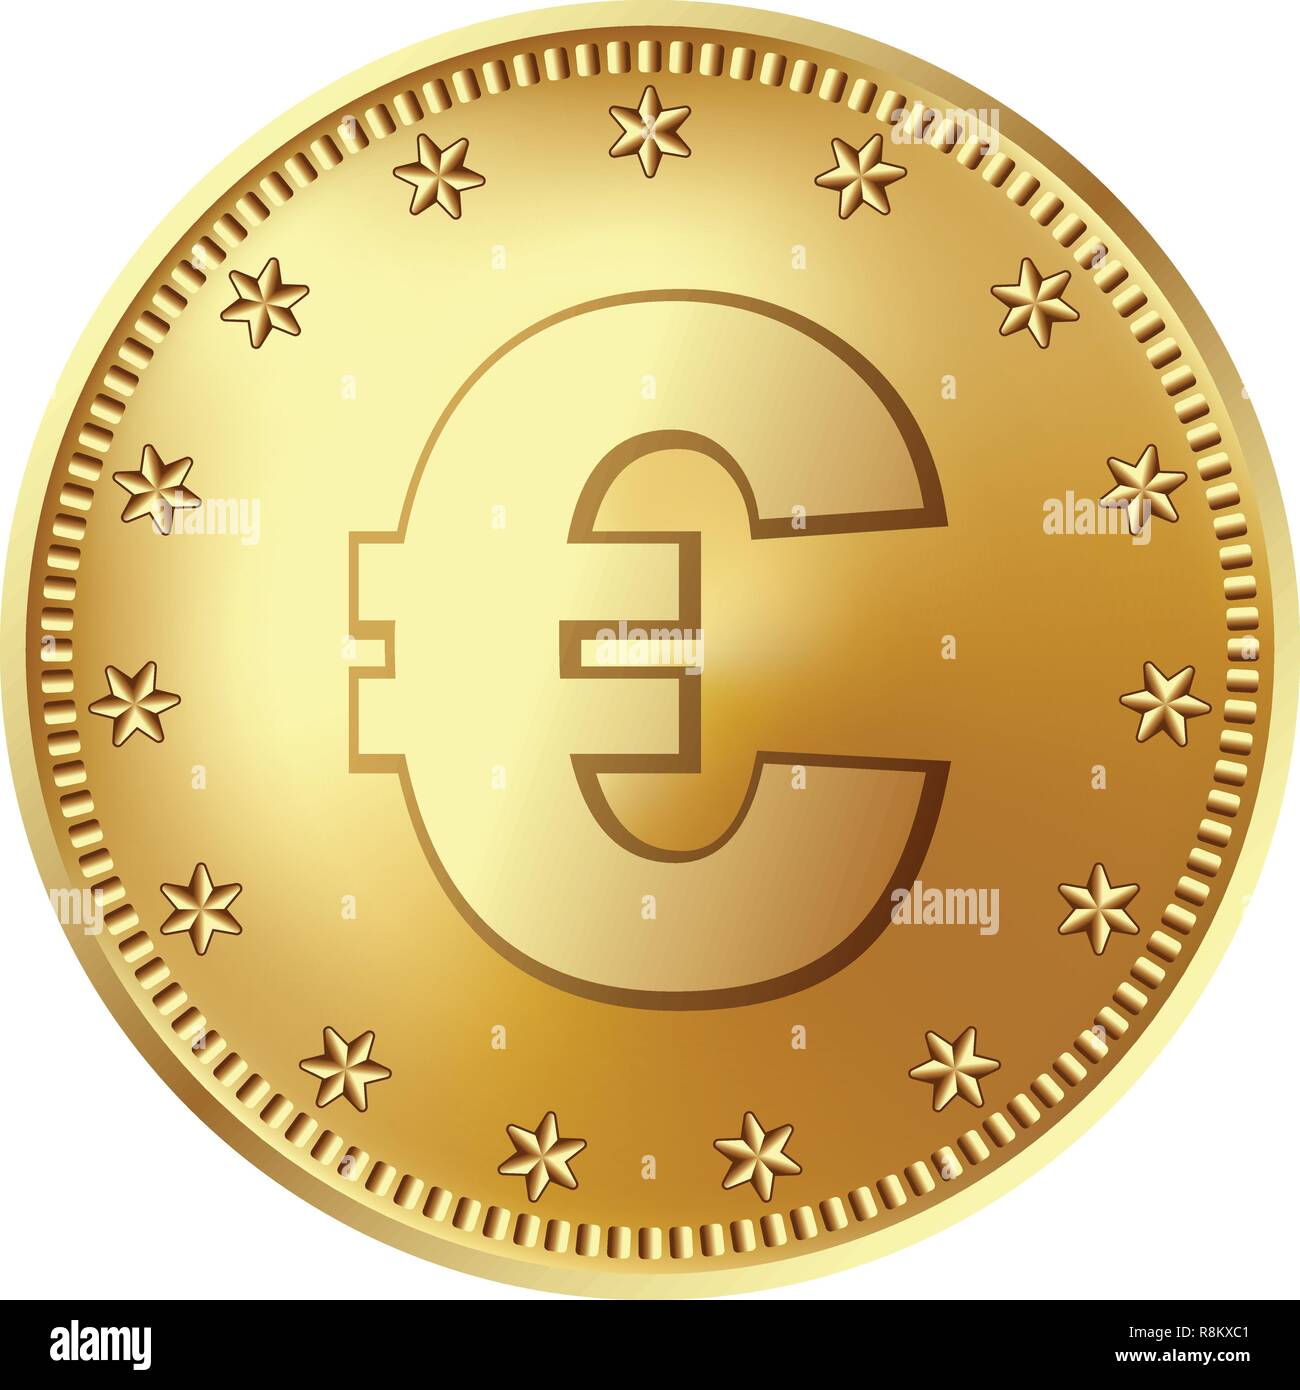 Golden euro moneta, denaro. Illustrazione Vettoriale